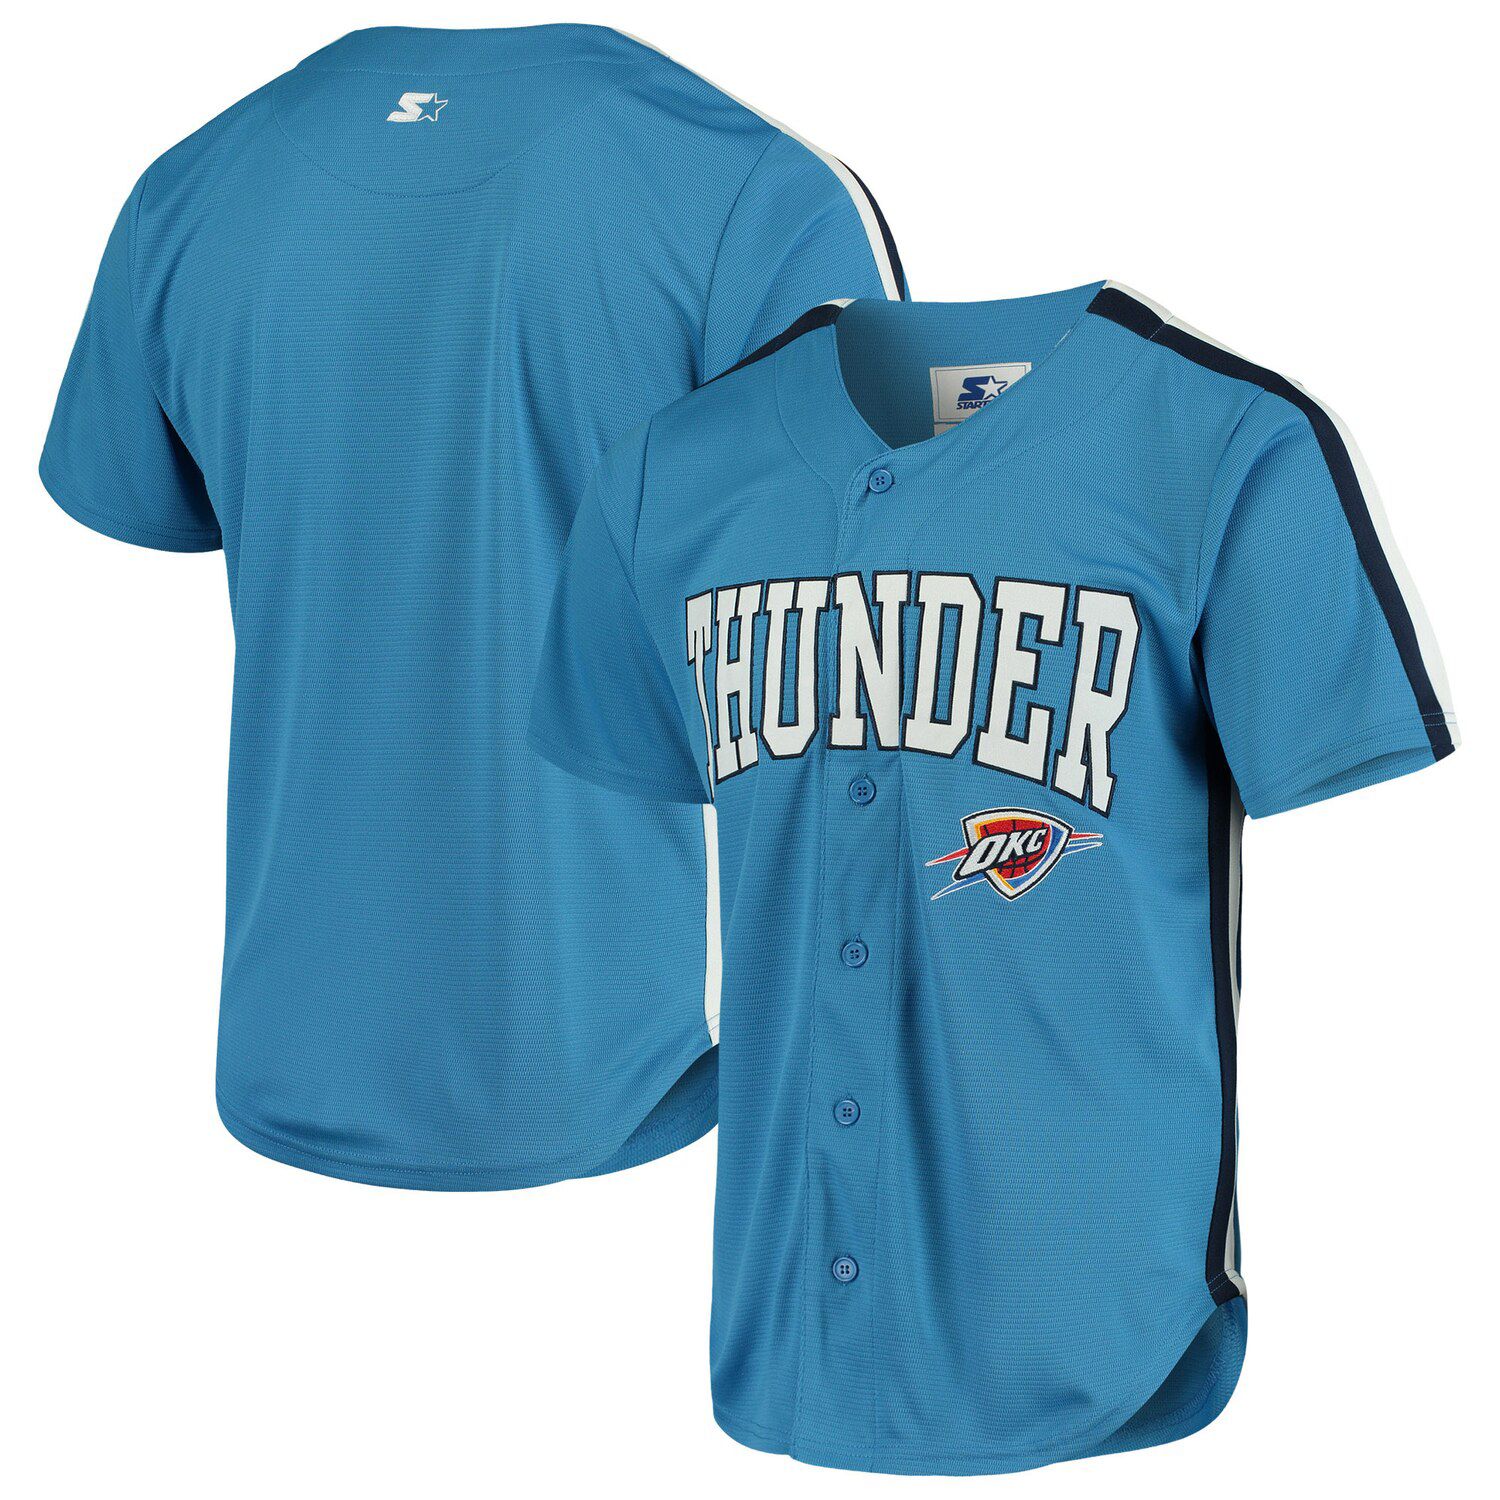 thunder jersey shirt